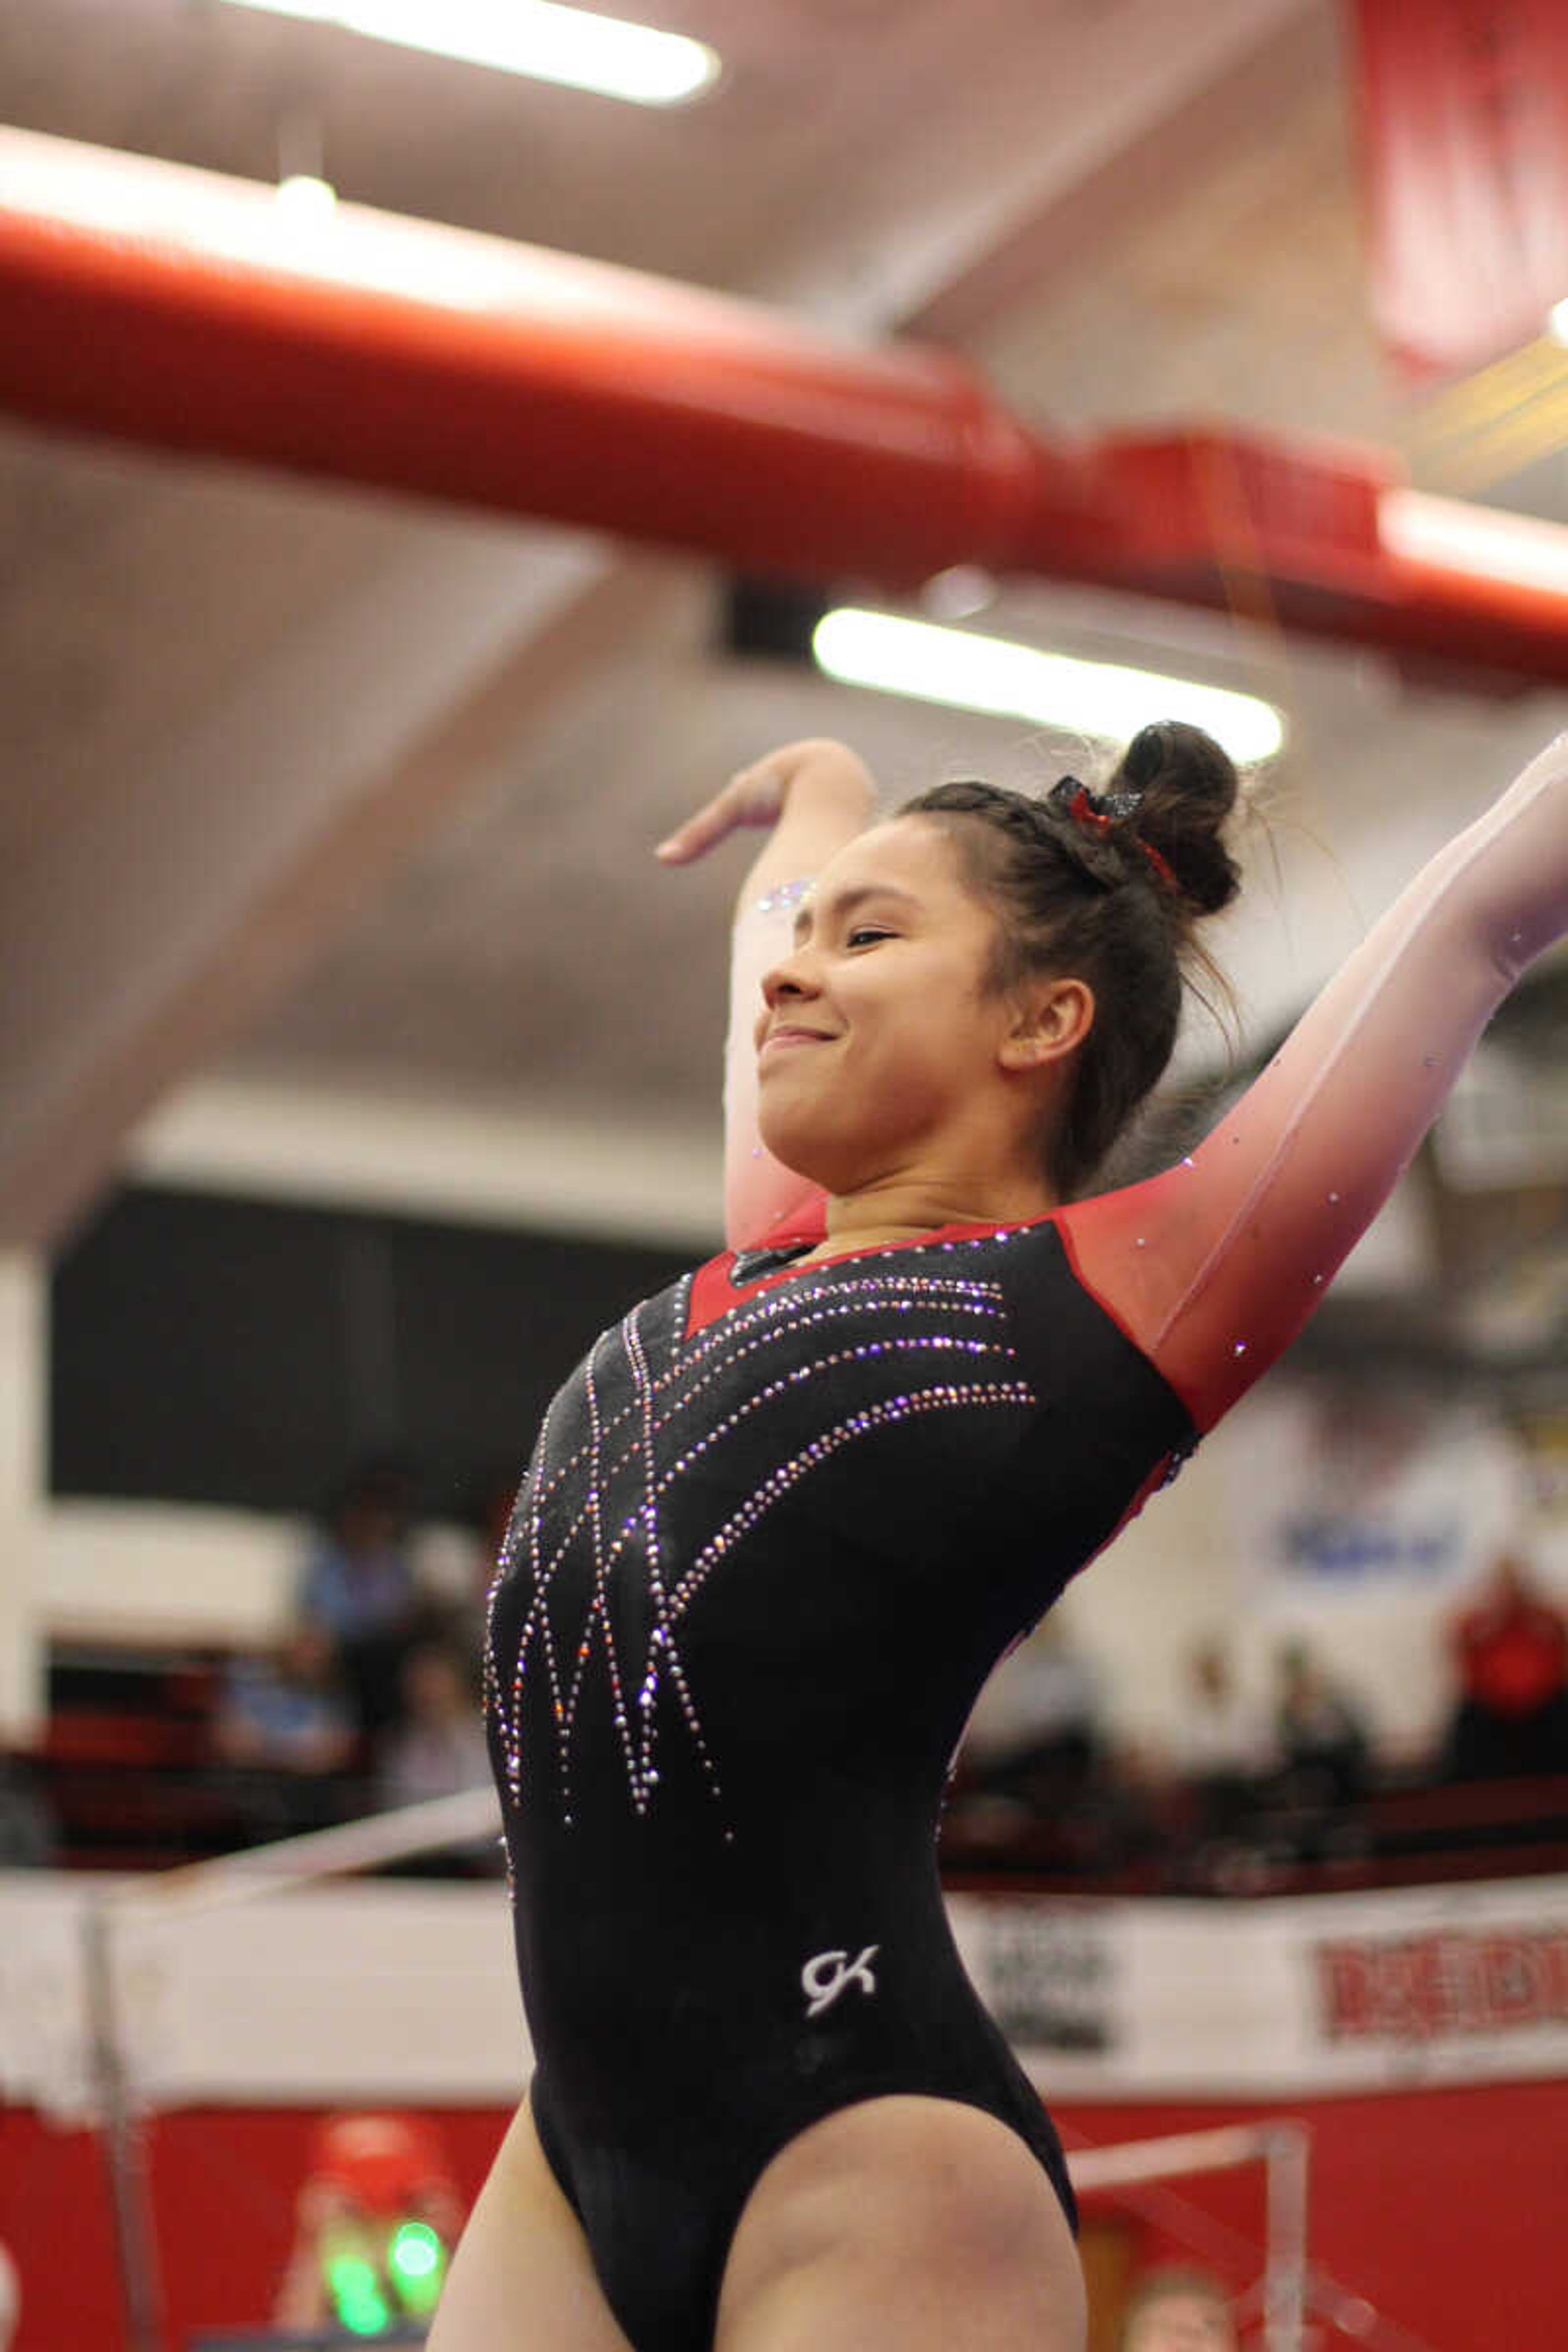 Anna Kaziska: Gymnastics' quiet, focused leader